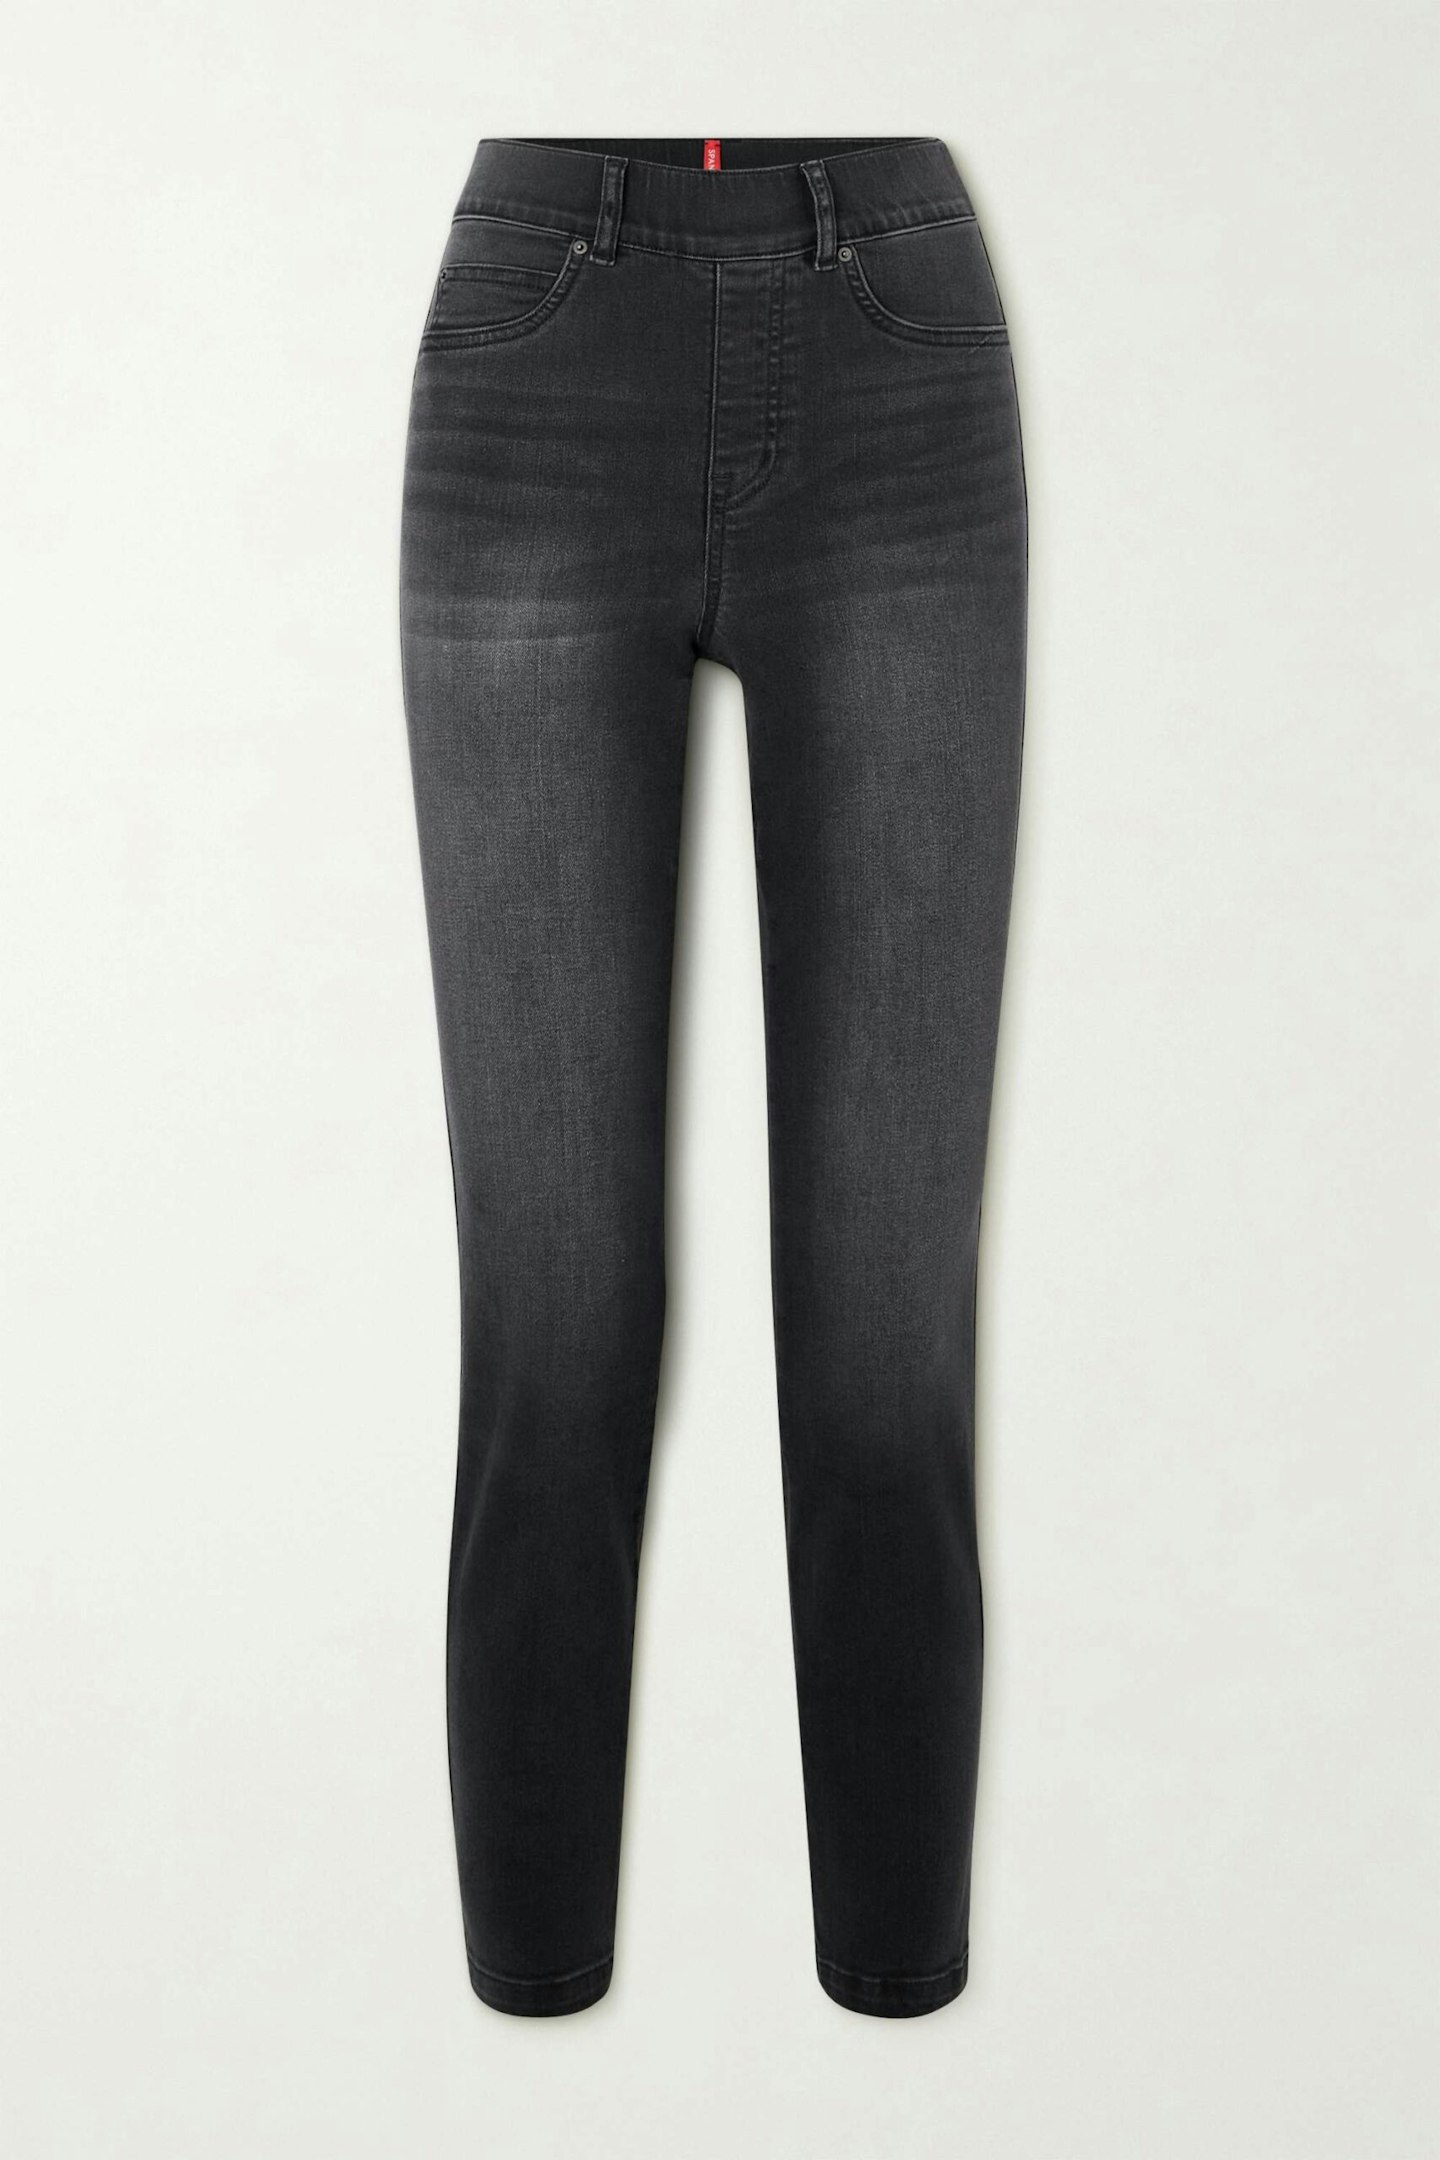 Best Skinny Jeans For Women 2023